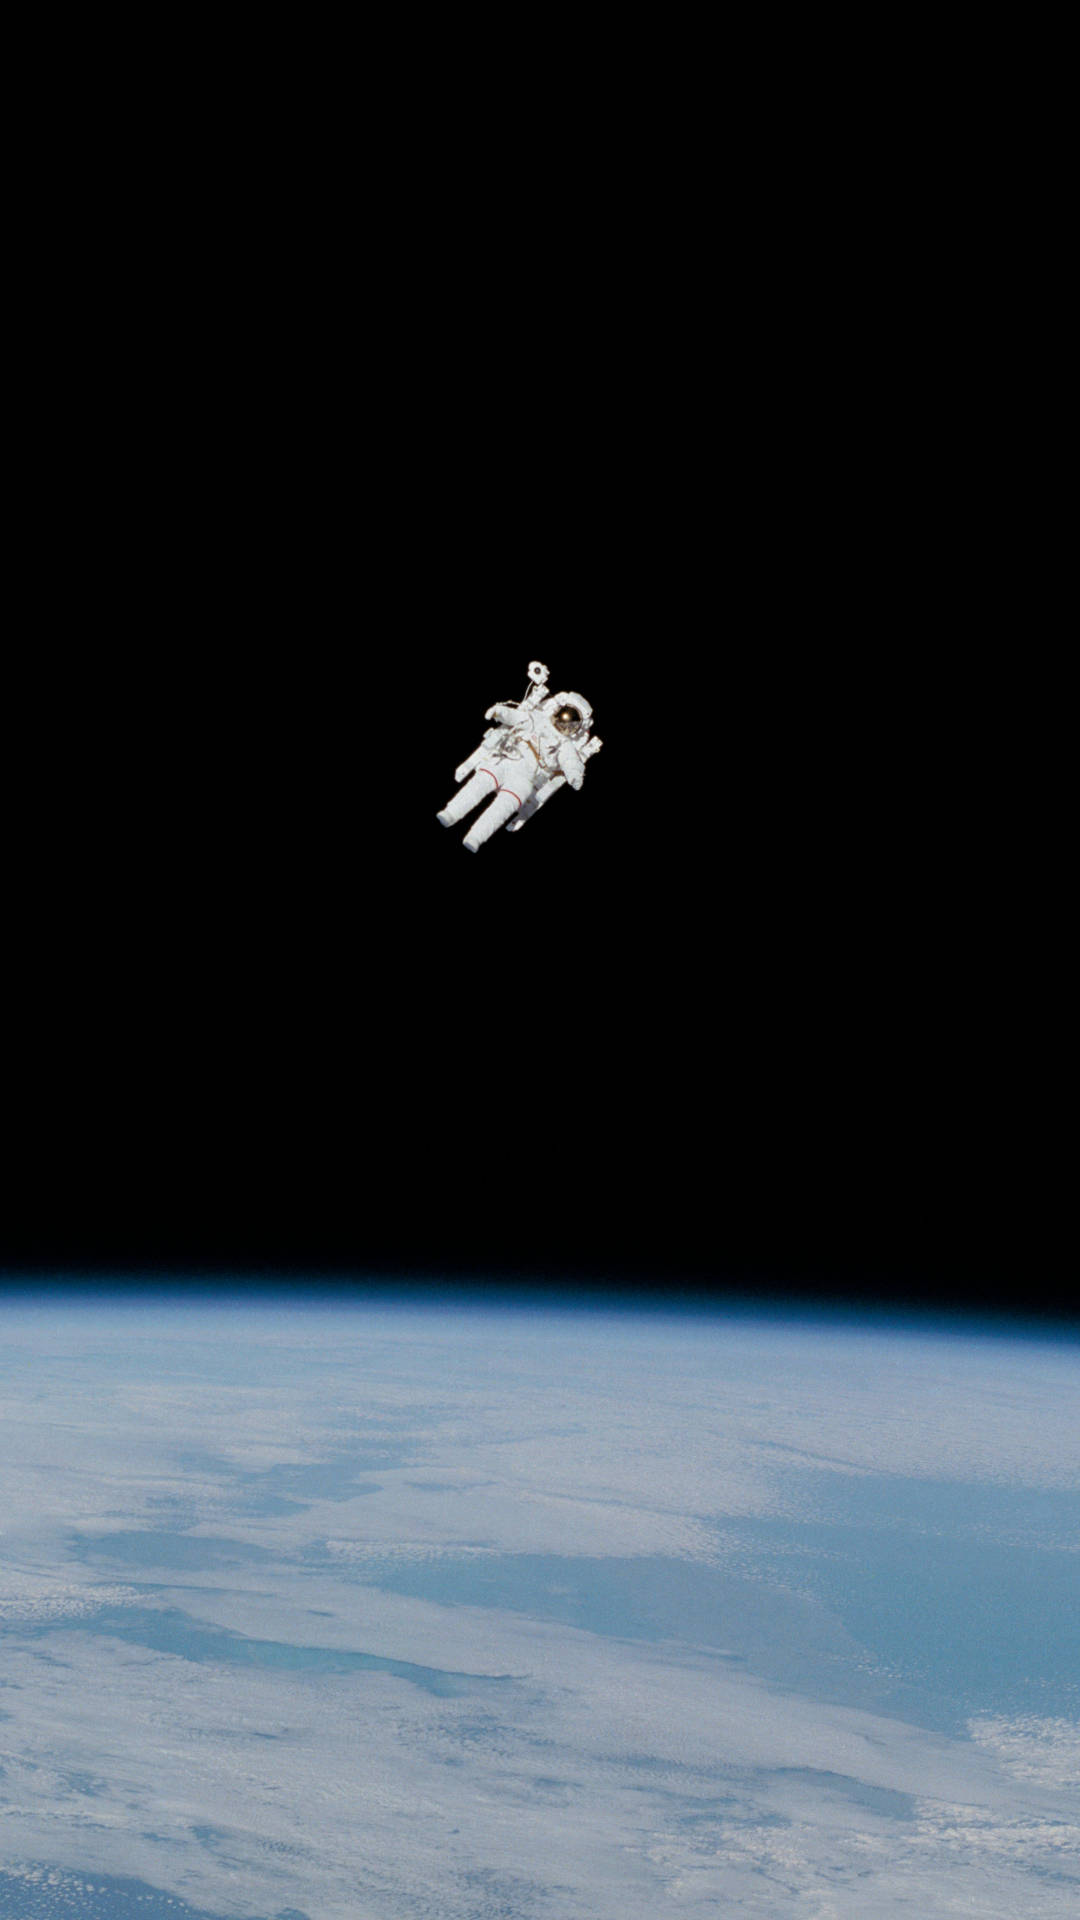 Astronaut Galaxy Iphone Background